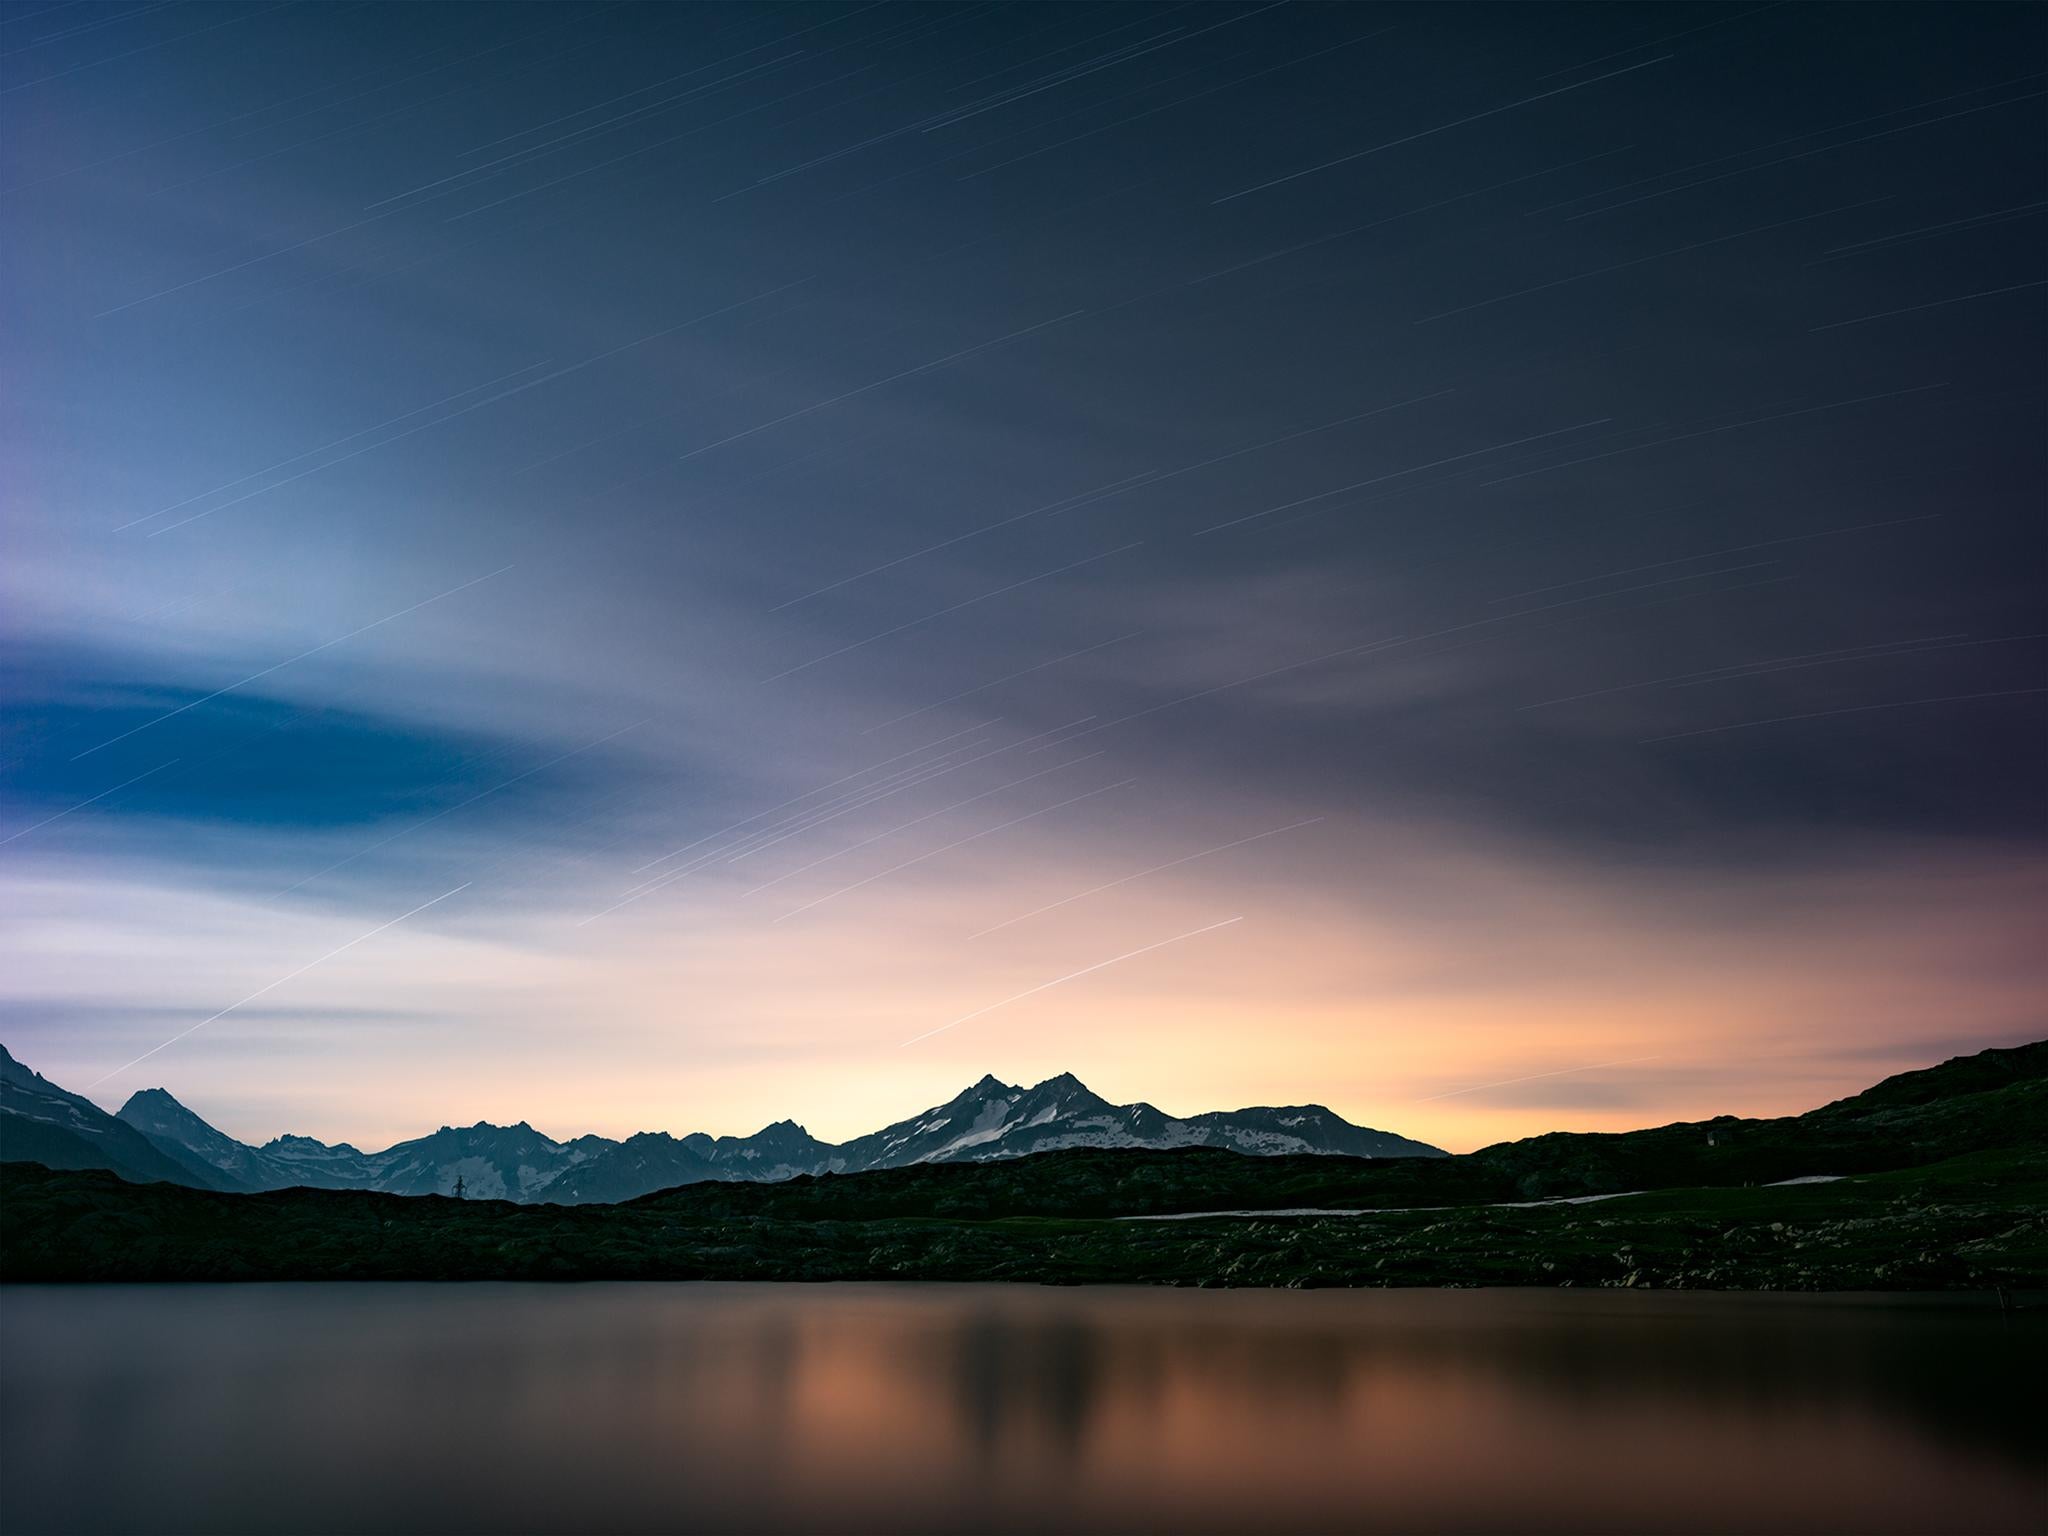 Long Exposure Medium Format Photography. Swiss Alps and a lake at night